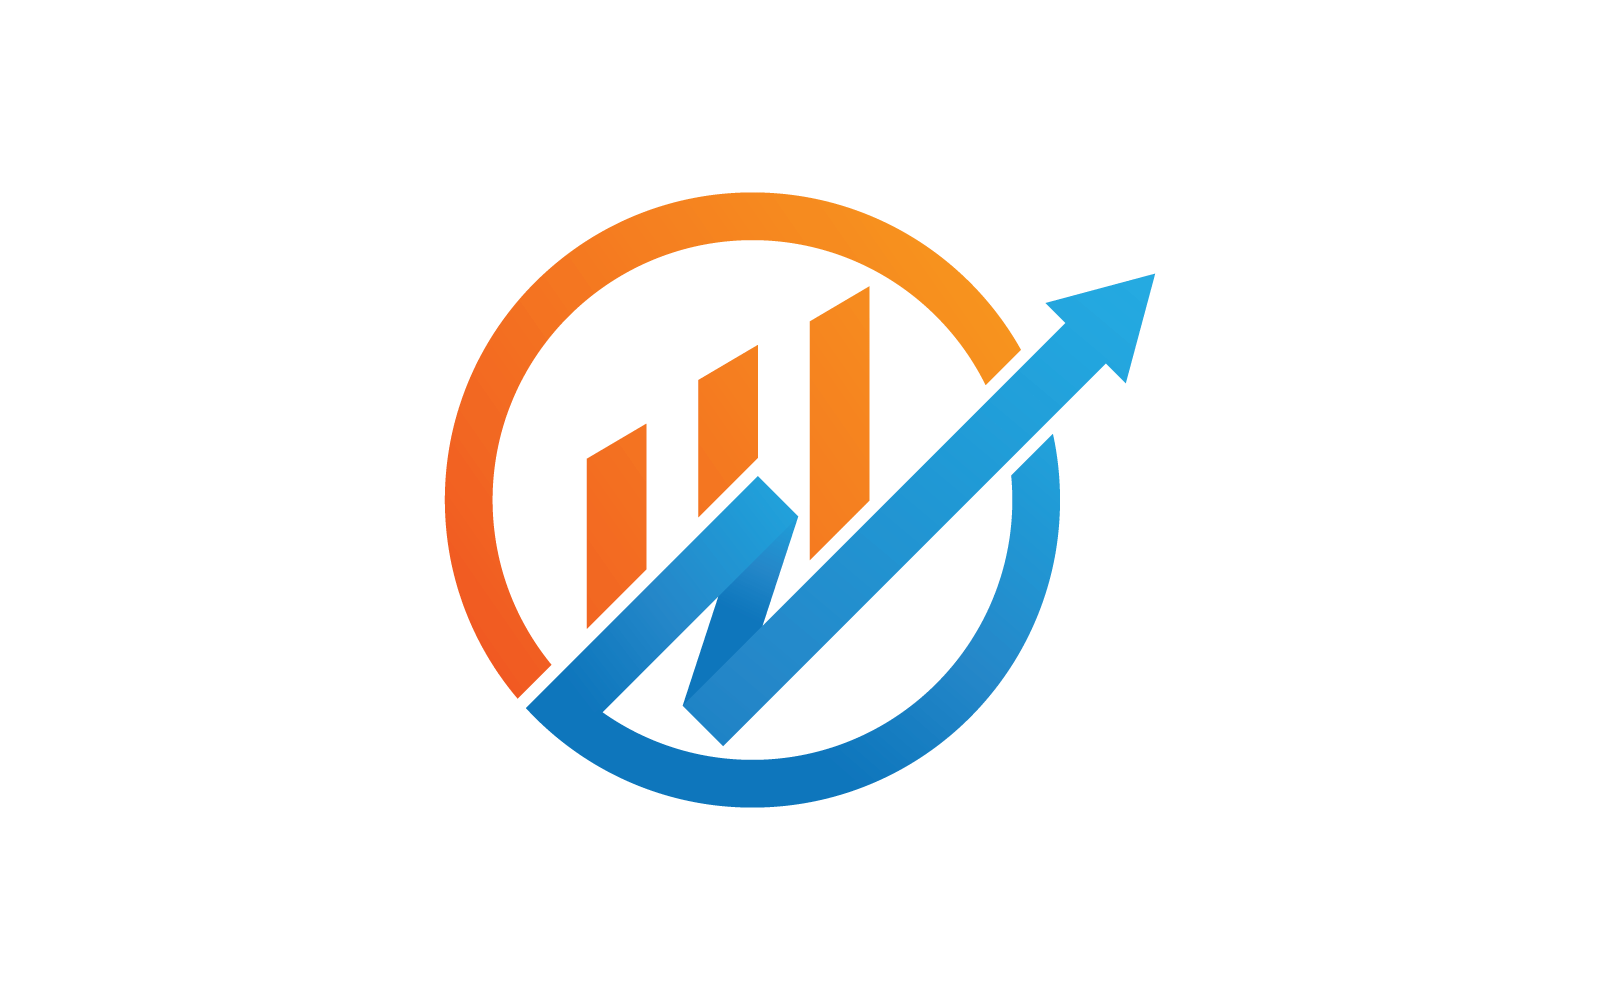 Business finance arrow logo ilustration design vector